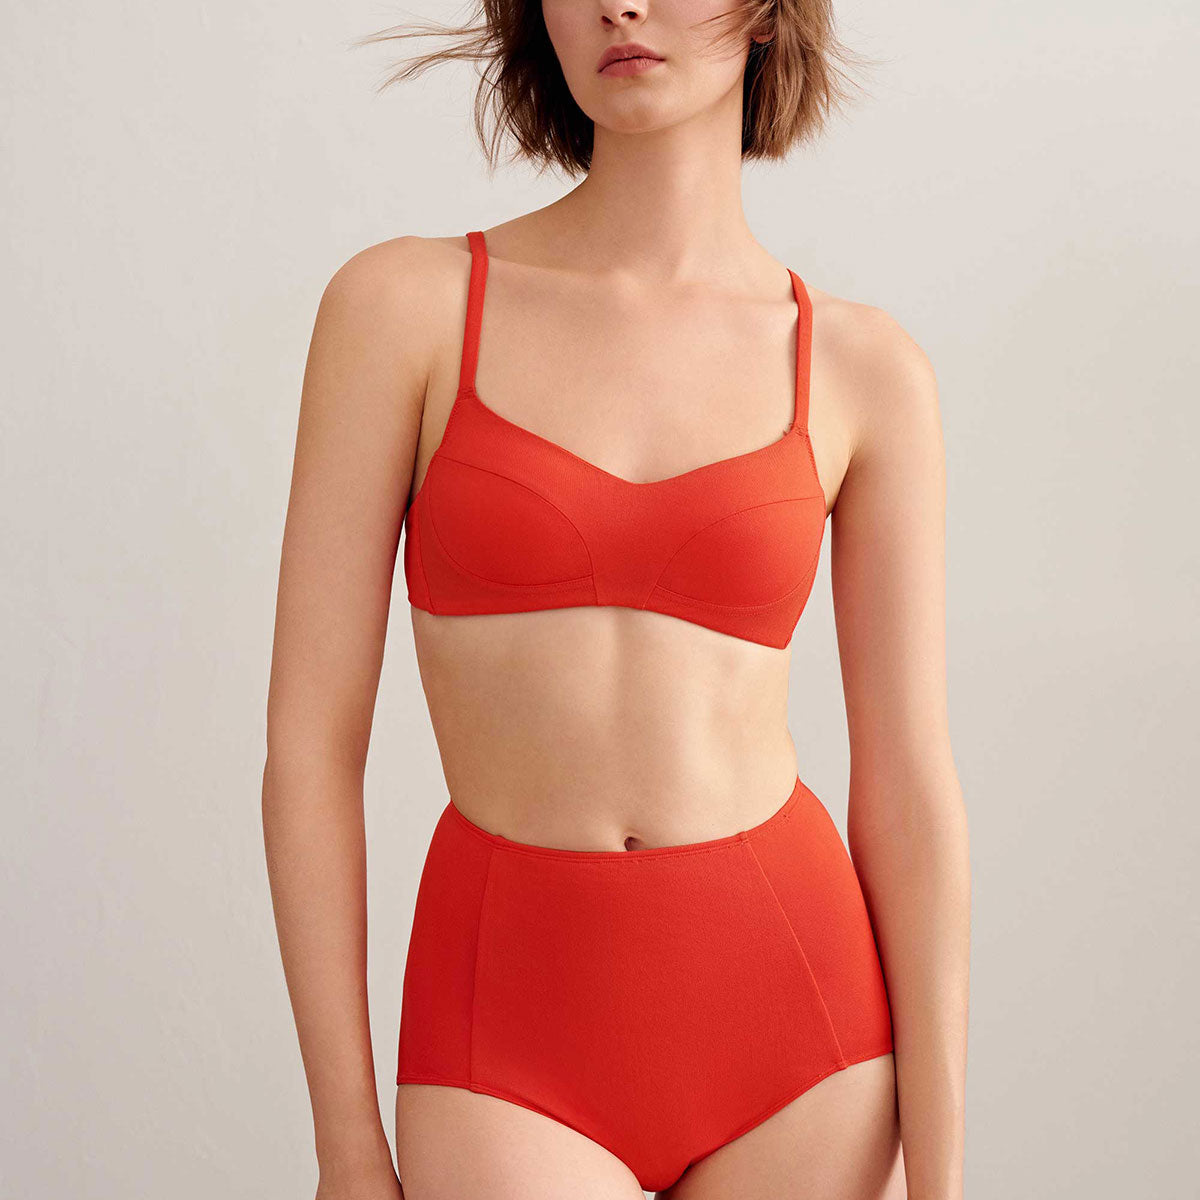 Woman wearing orange bikini top and high waisted bikini bottom